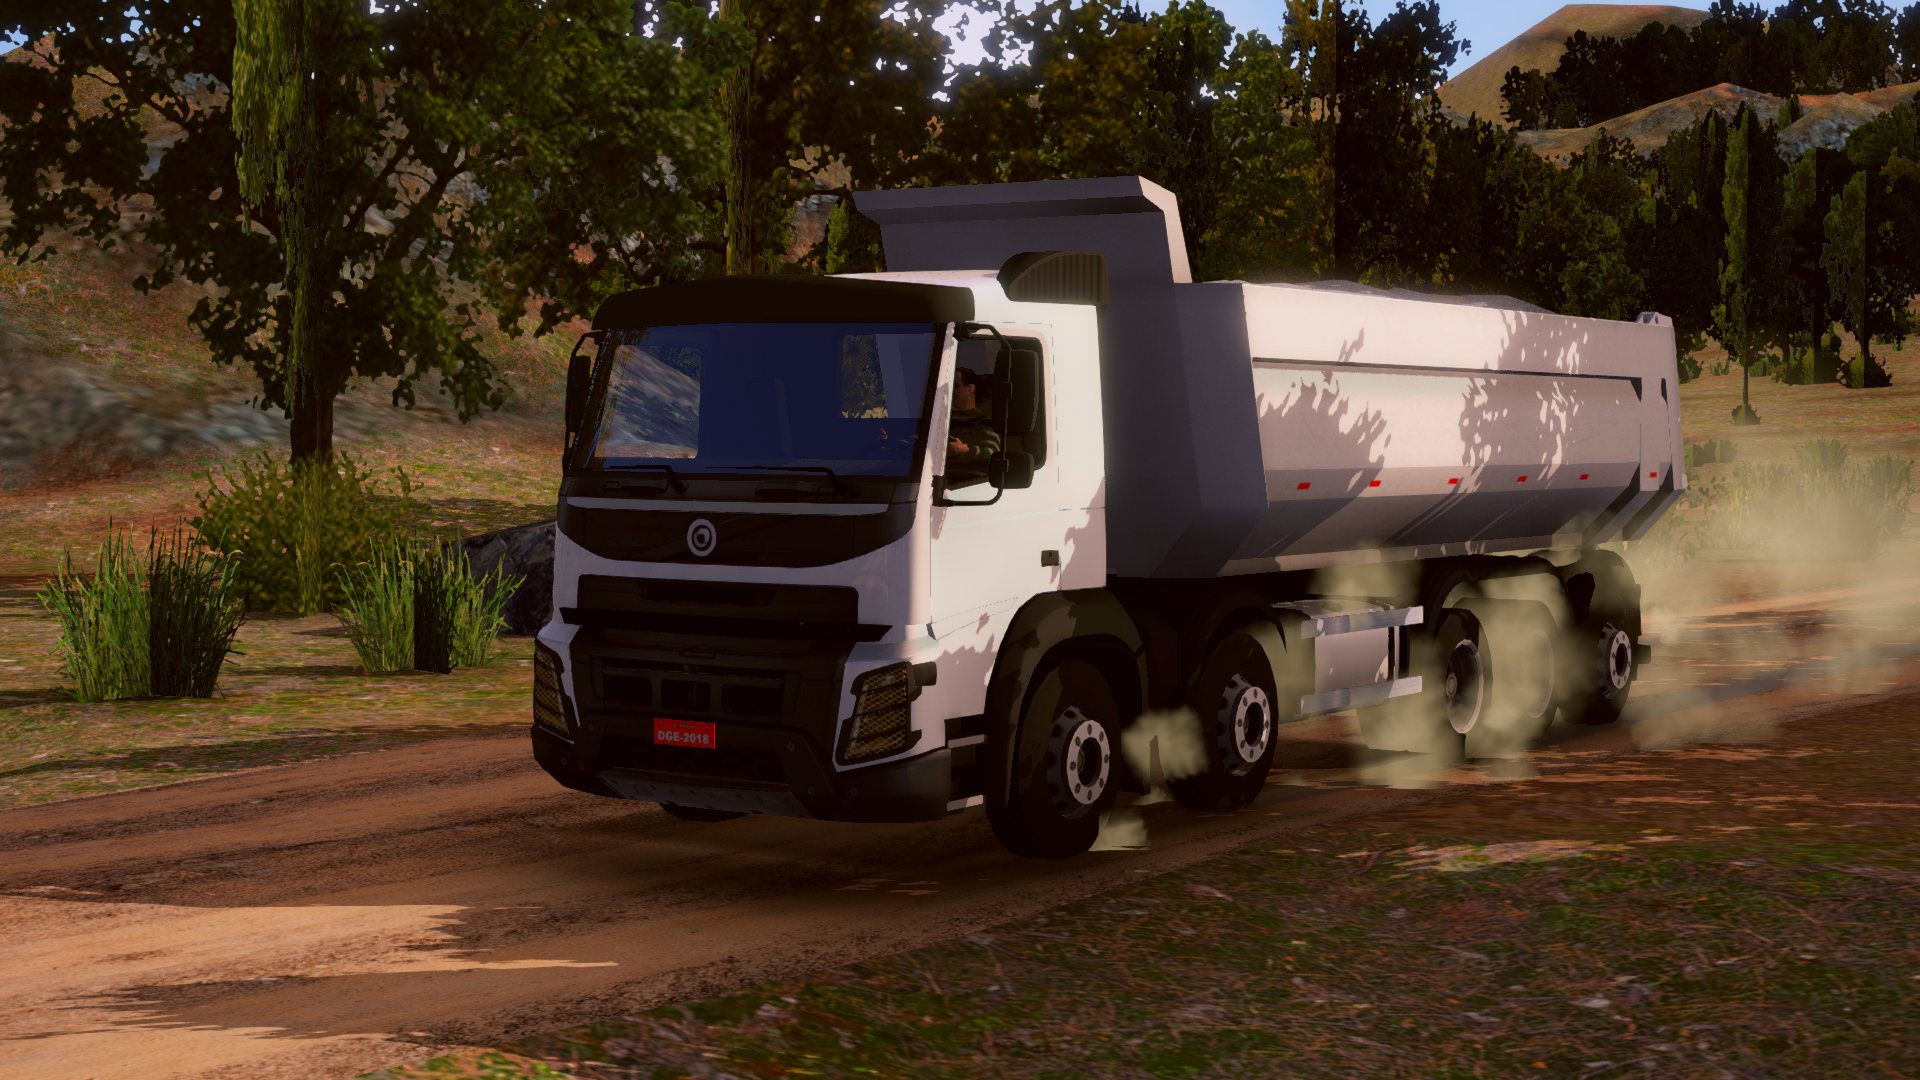 World Truck Driving Simulator 1,389 APK Baixar